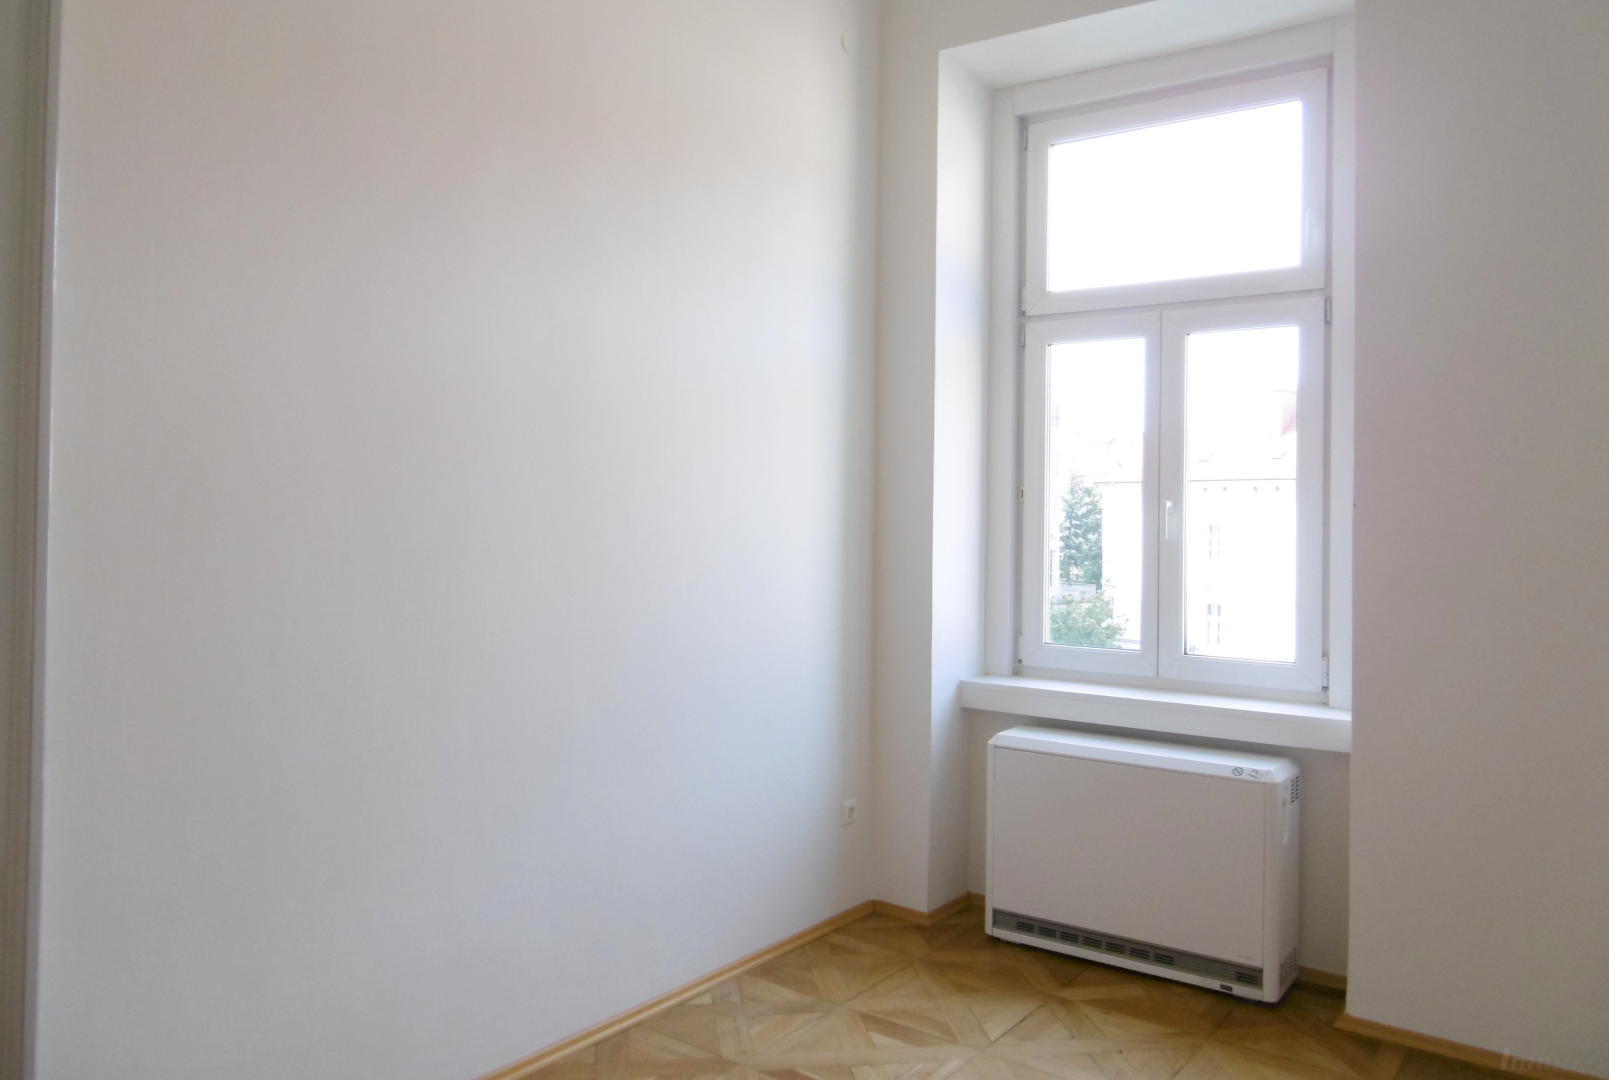 Wohnung zum Mieten: 8010 Graz - P1010007